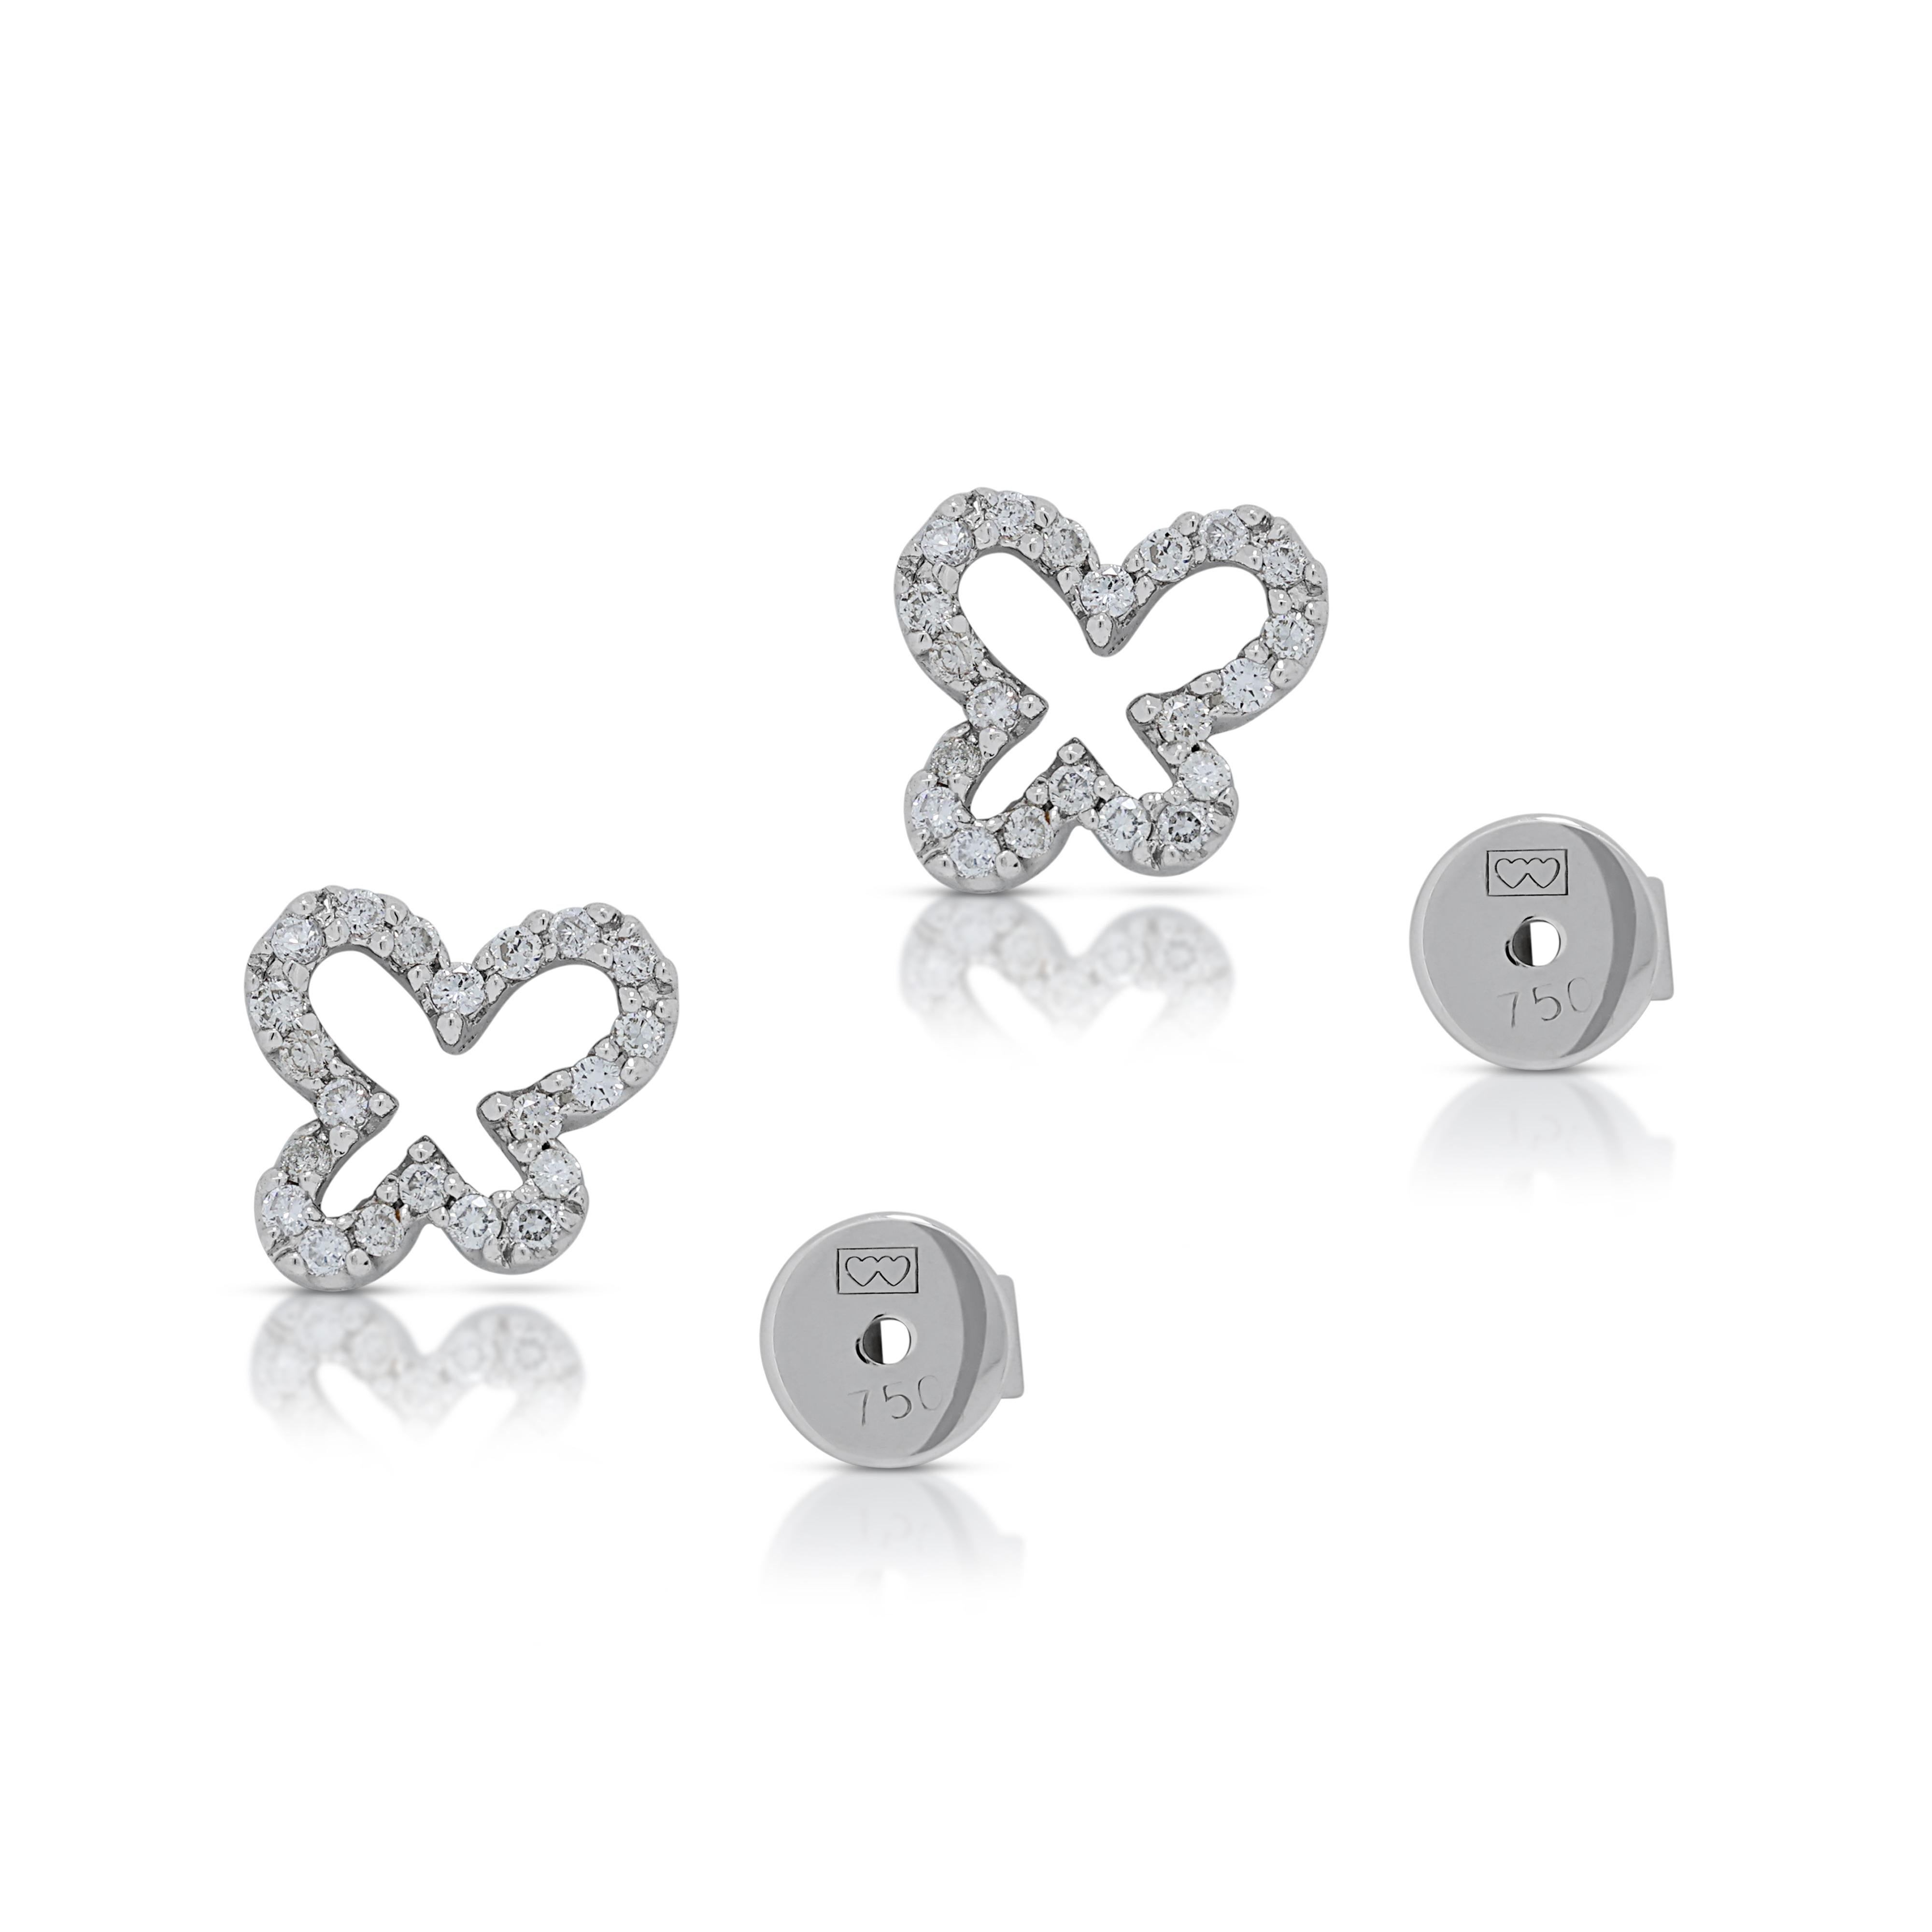 Stunning 0.29ct Diamonds Stud Earrings in 18K White Gold For Sale 2